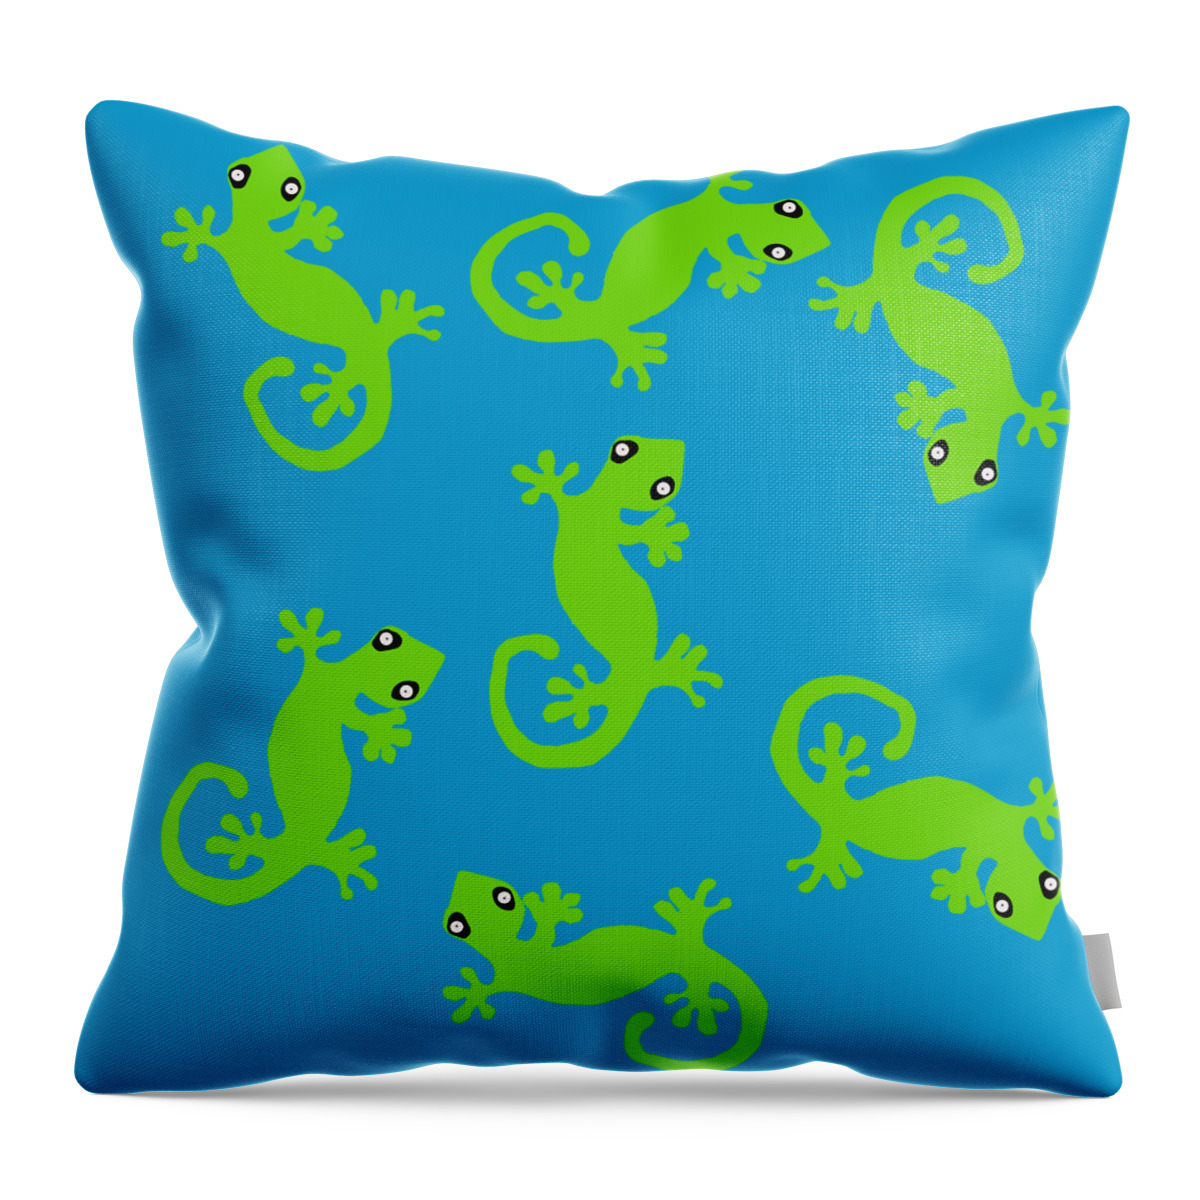 Cavorting Geckos Throw Pillow featuring the digital art Cavorting Geckos by Kandy Hurley